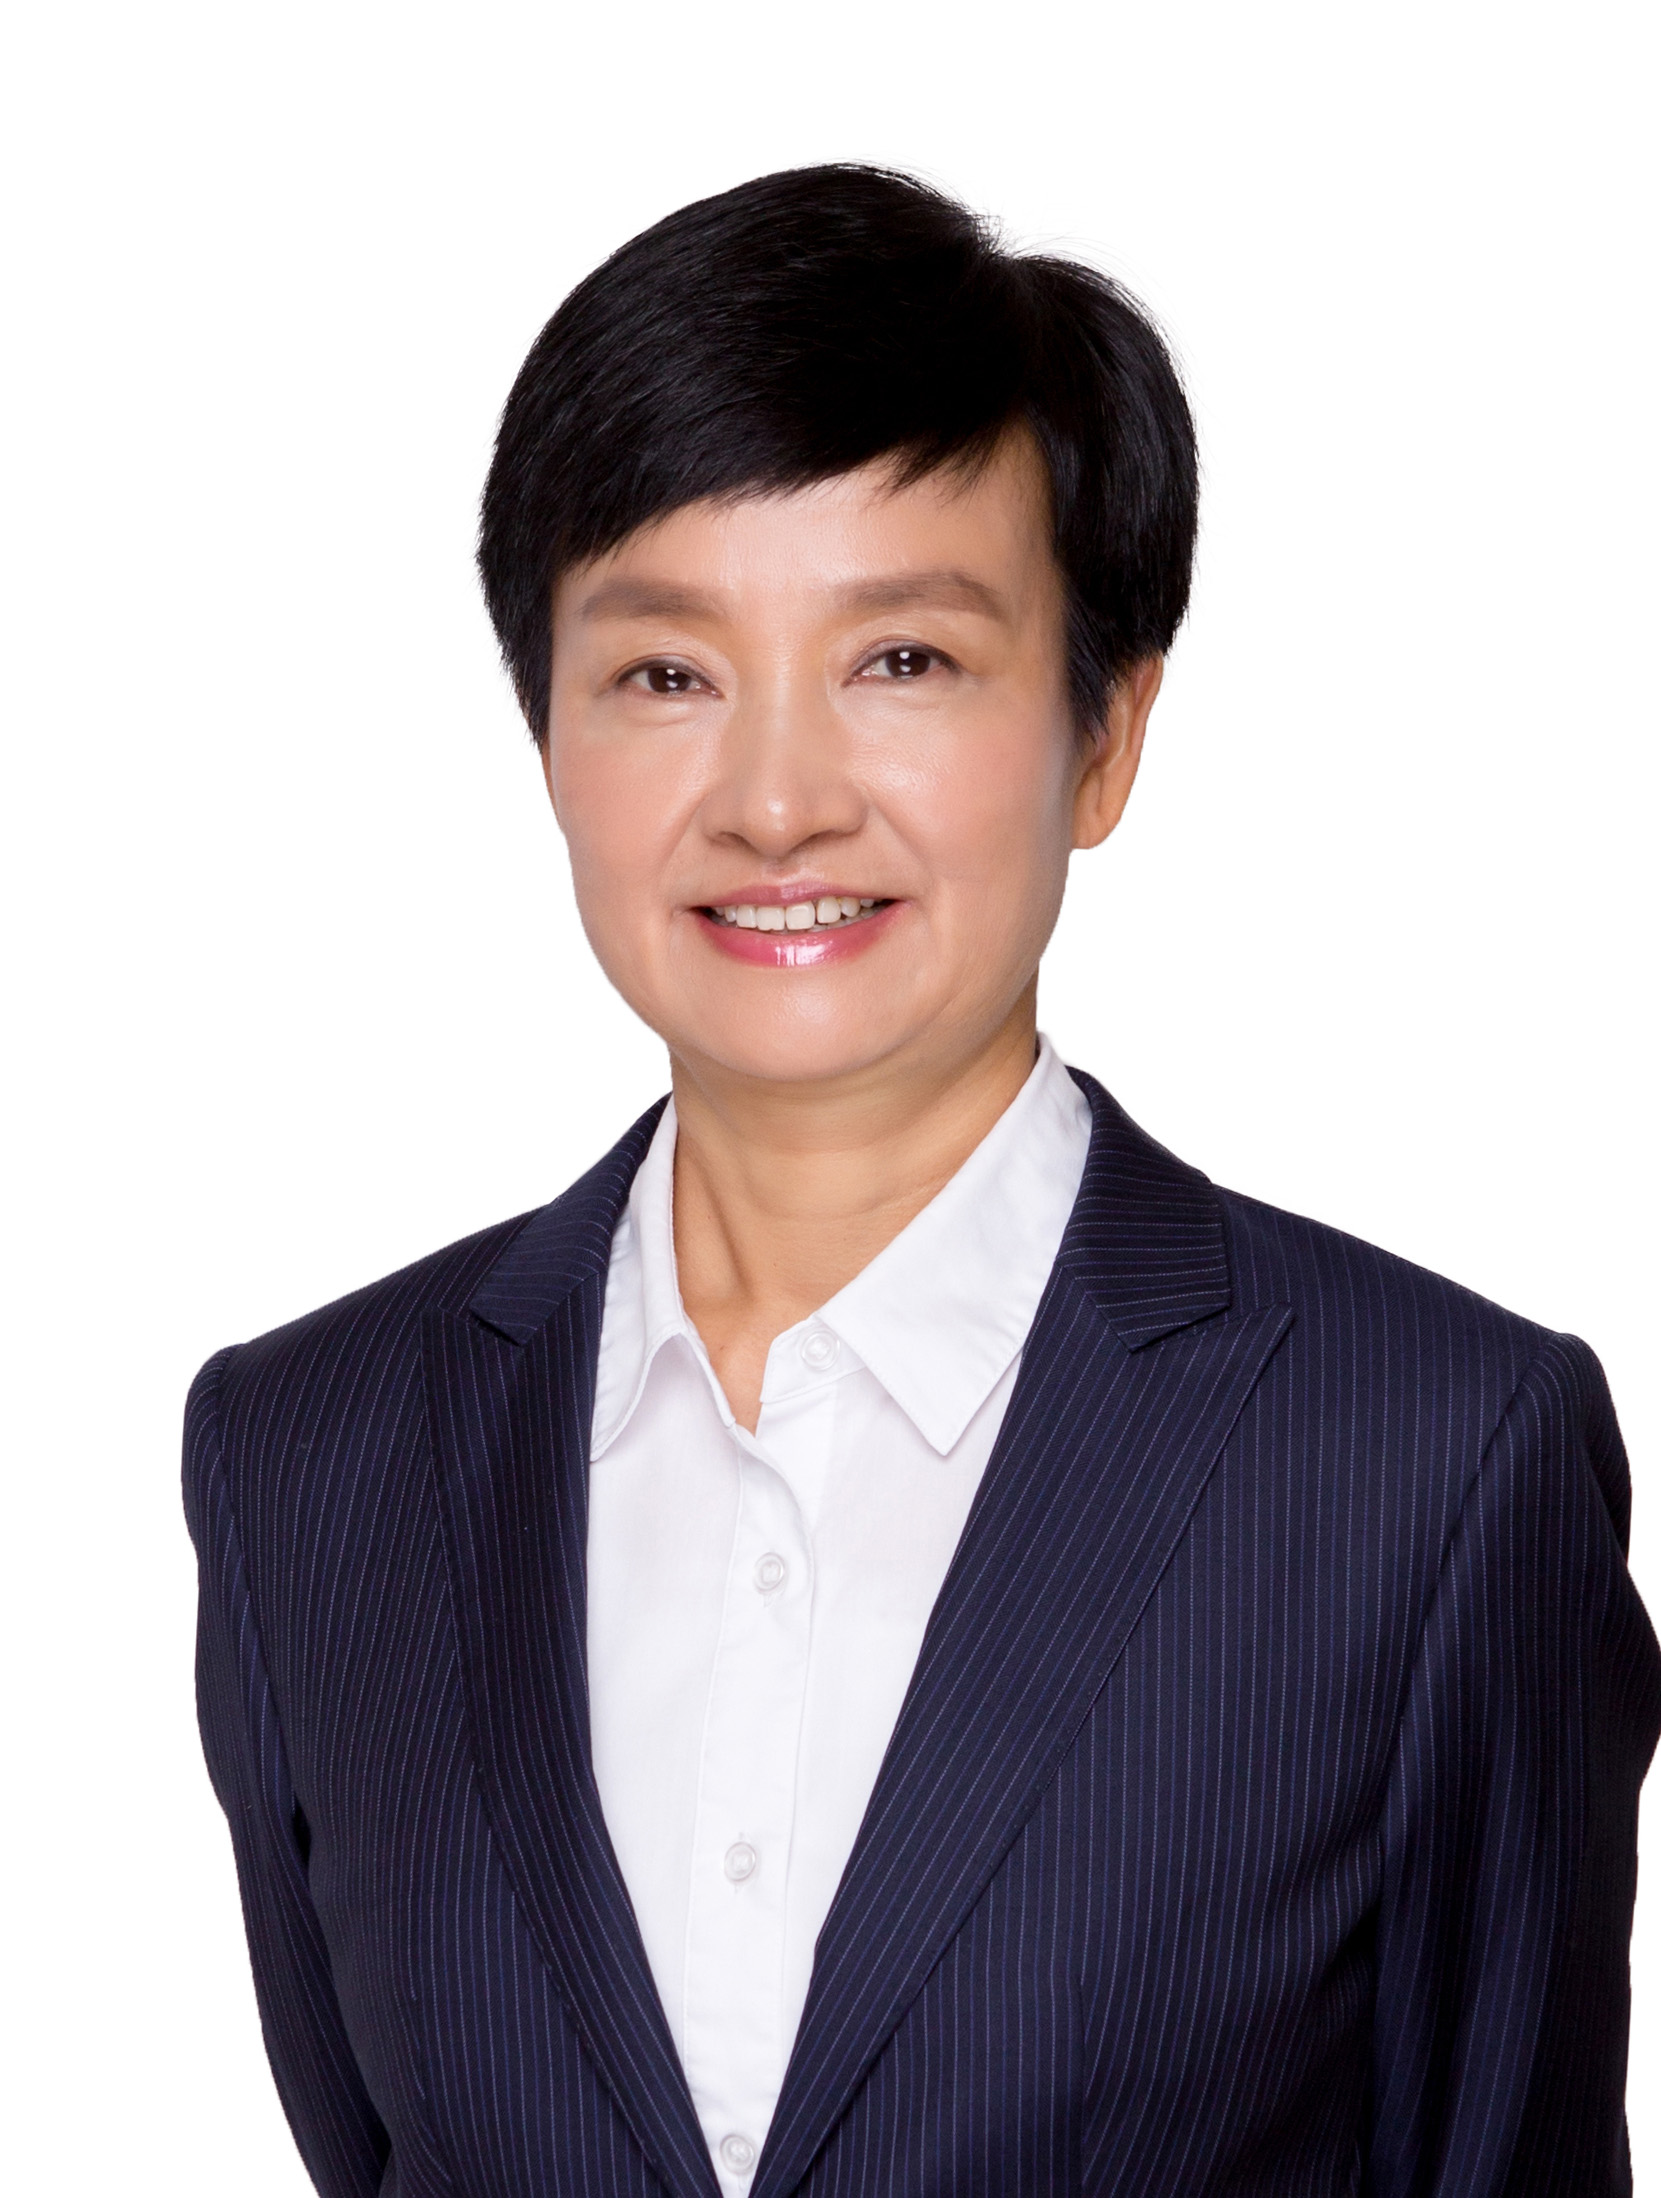 Ms. Duan Xianghui, Director